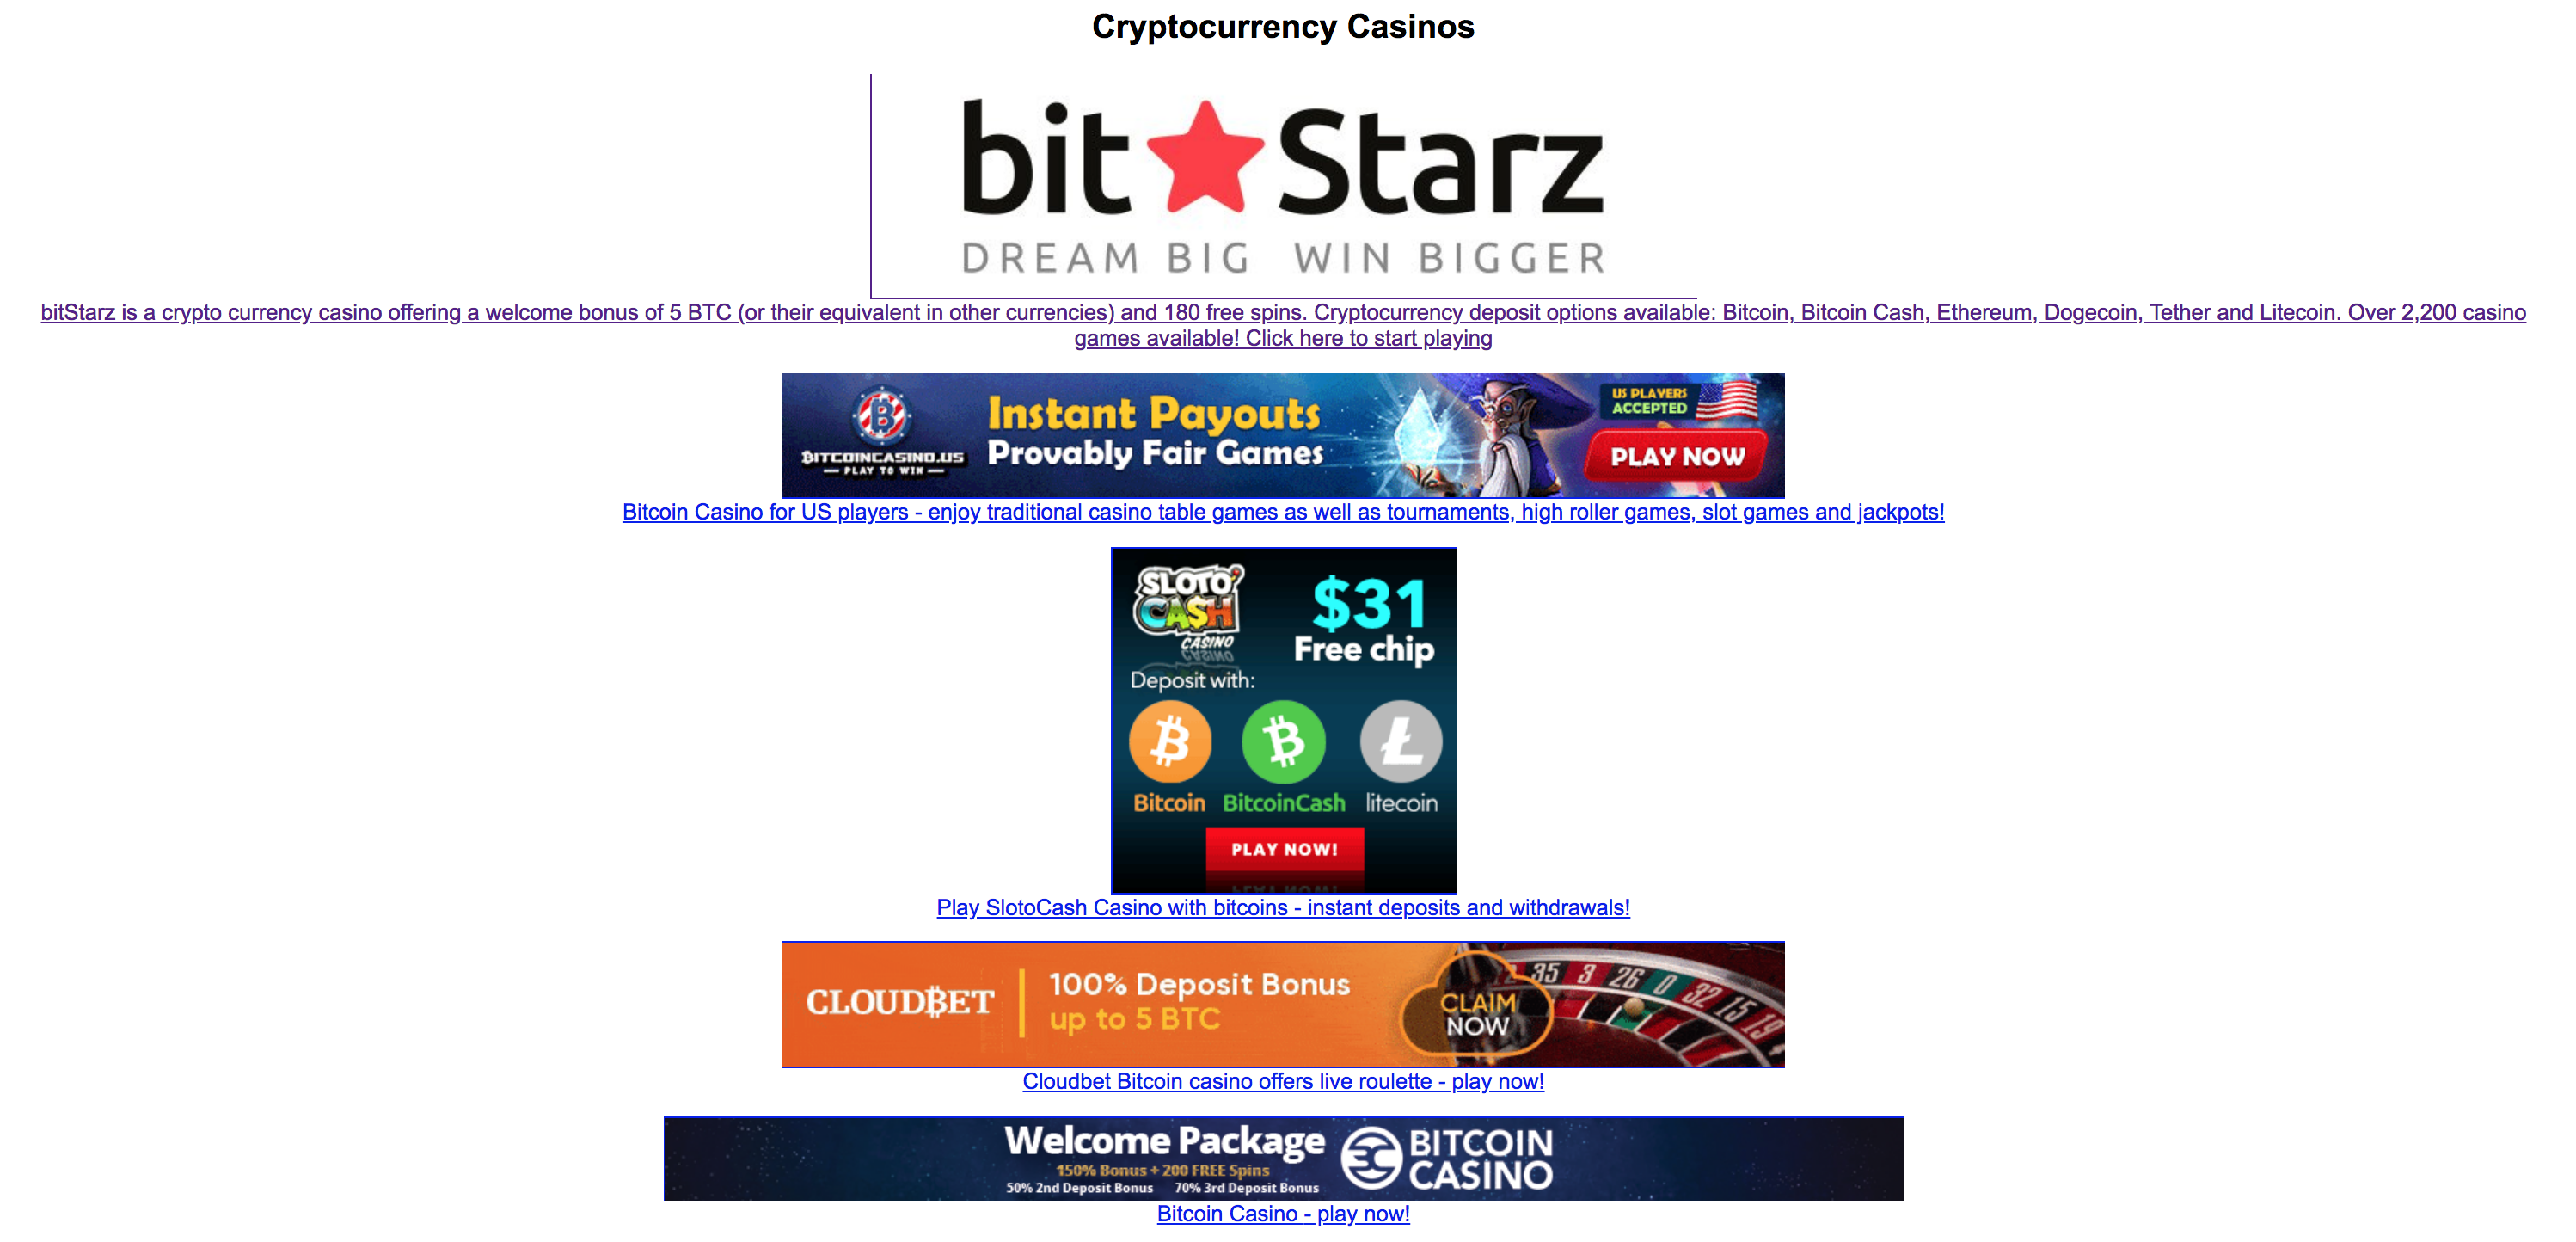 Live casino online blackjack